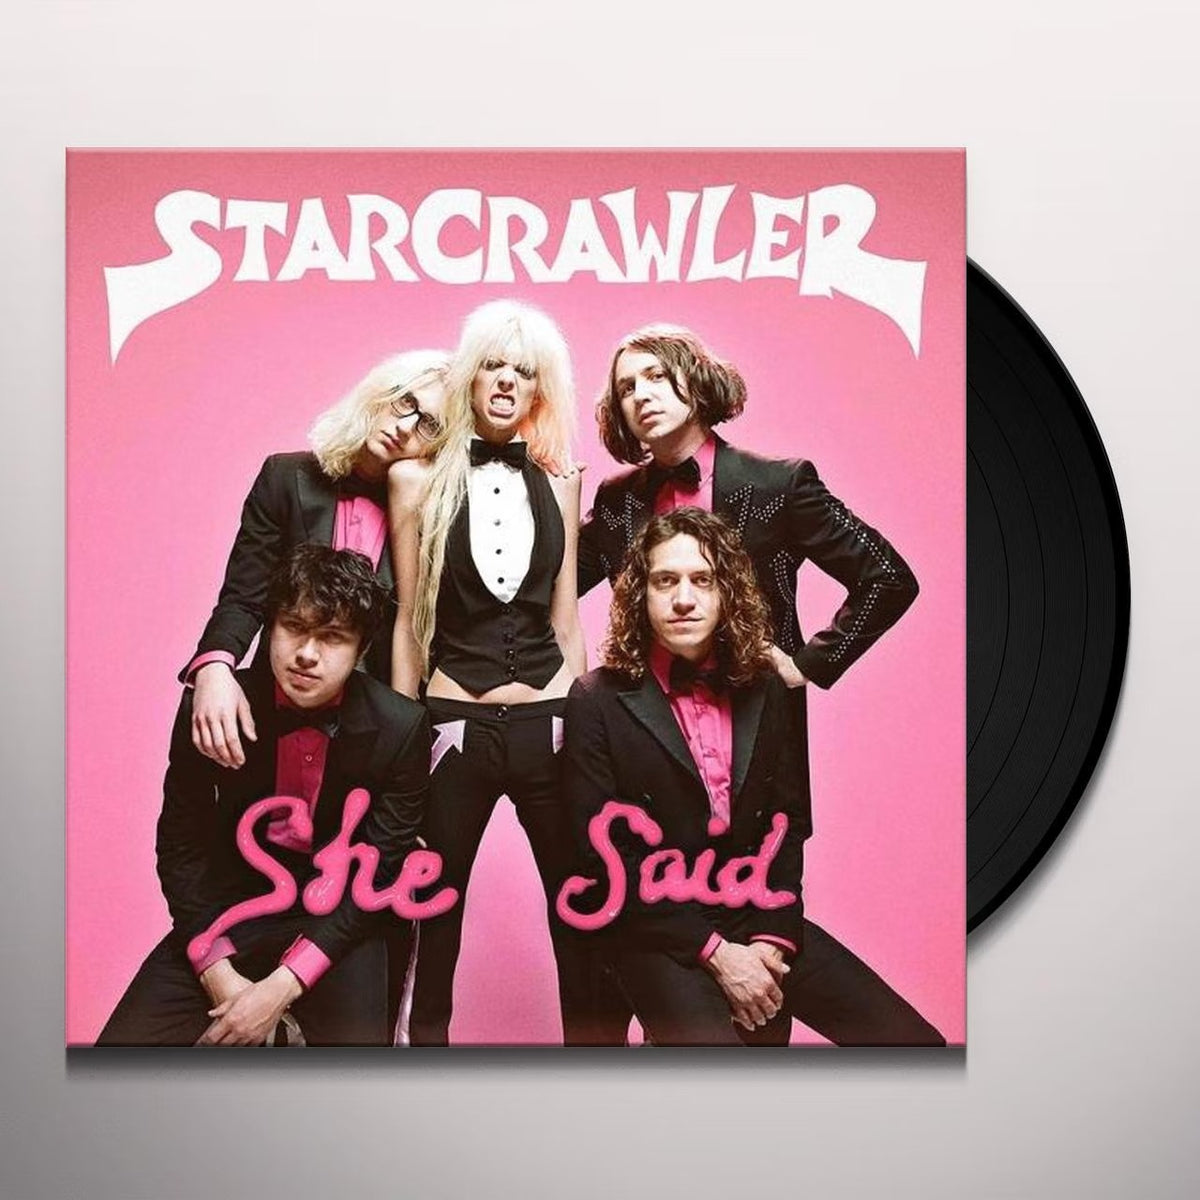 Starcrawler - She Said LP (Black Vinyl)